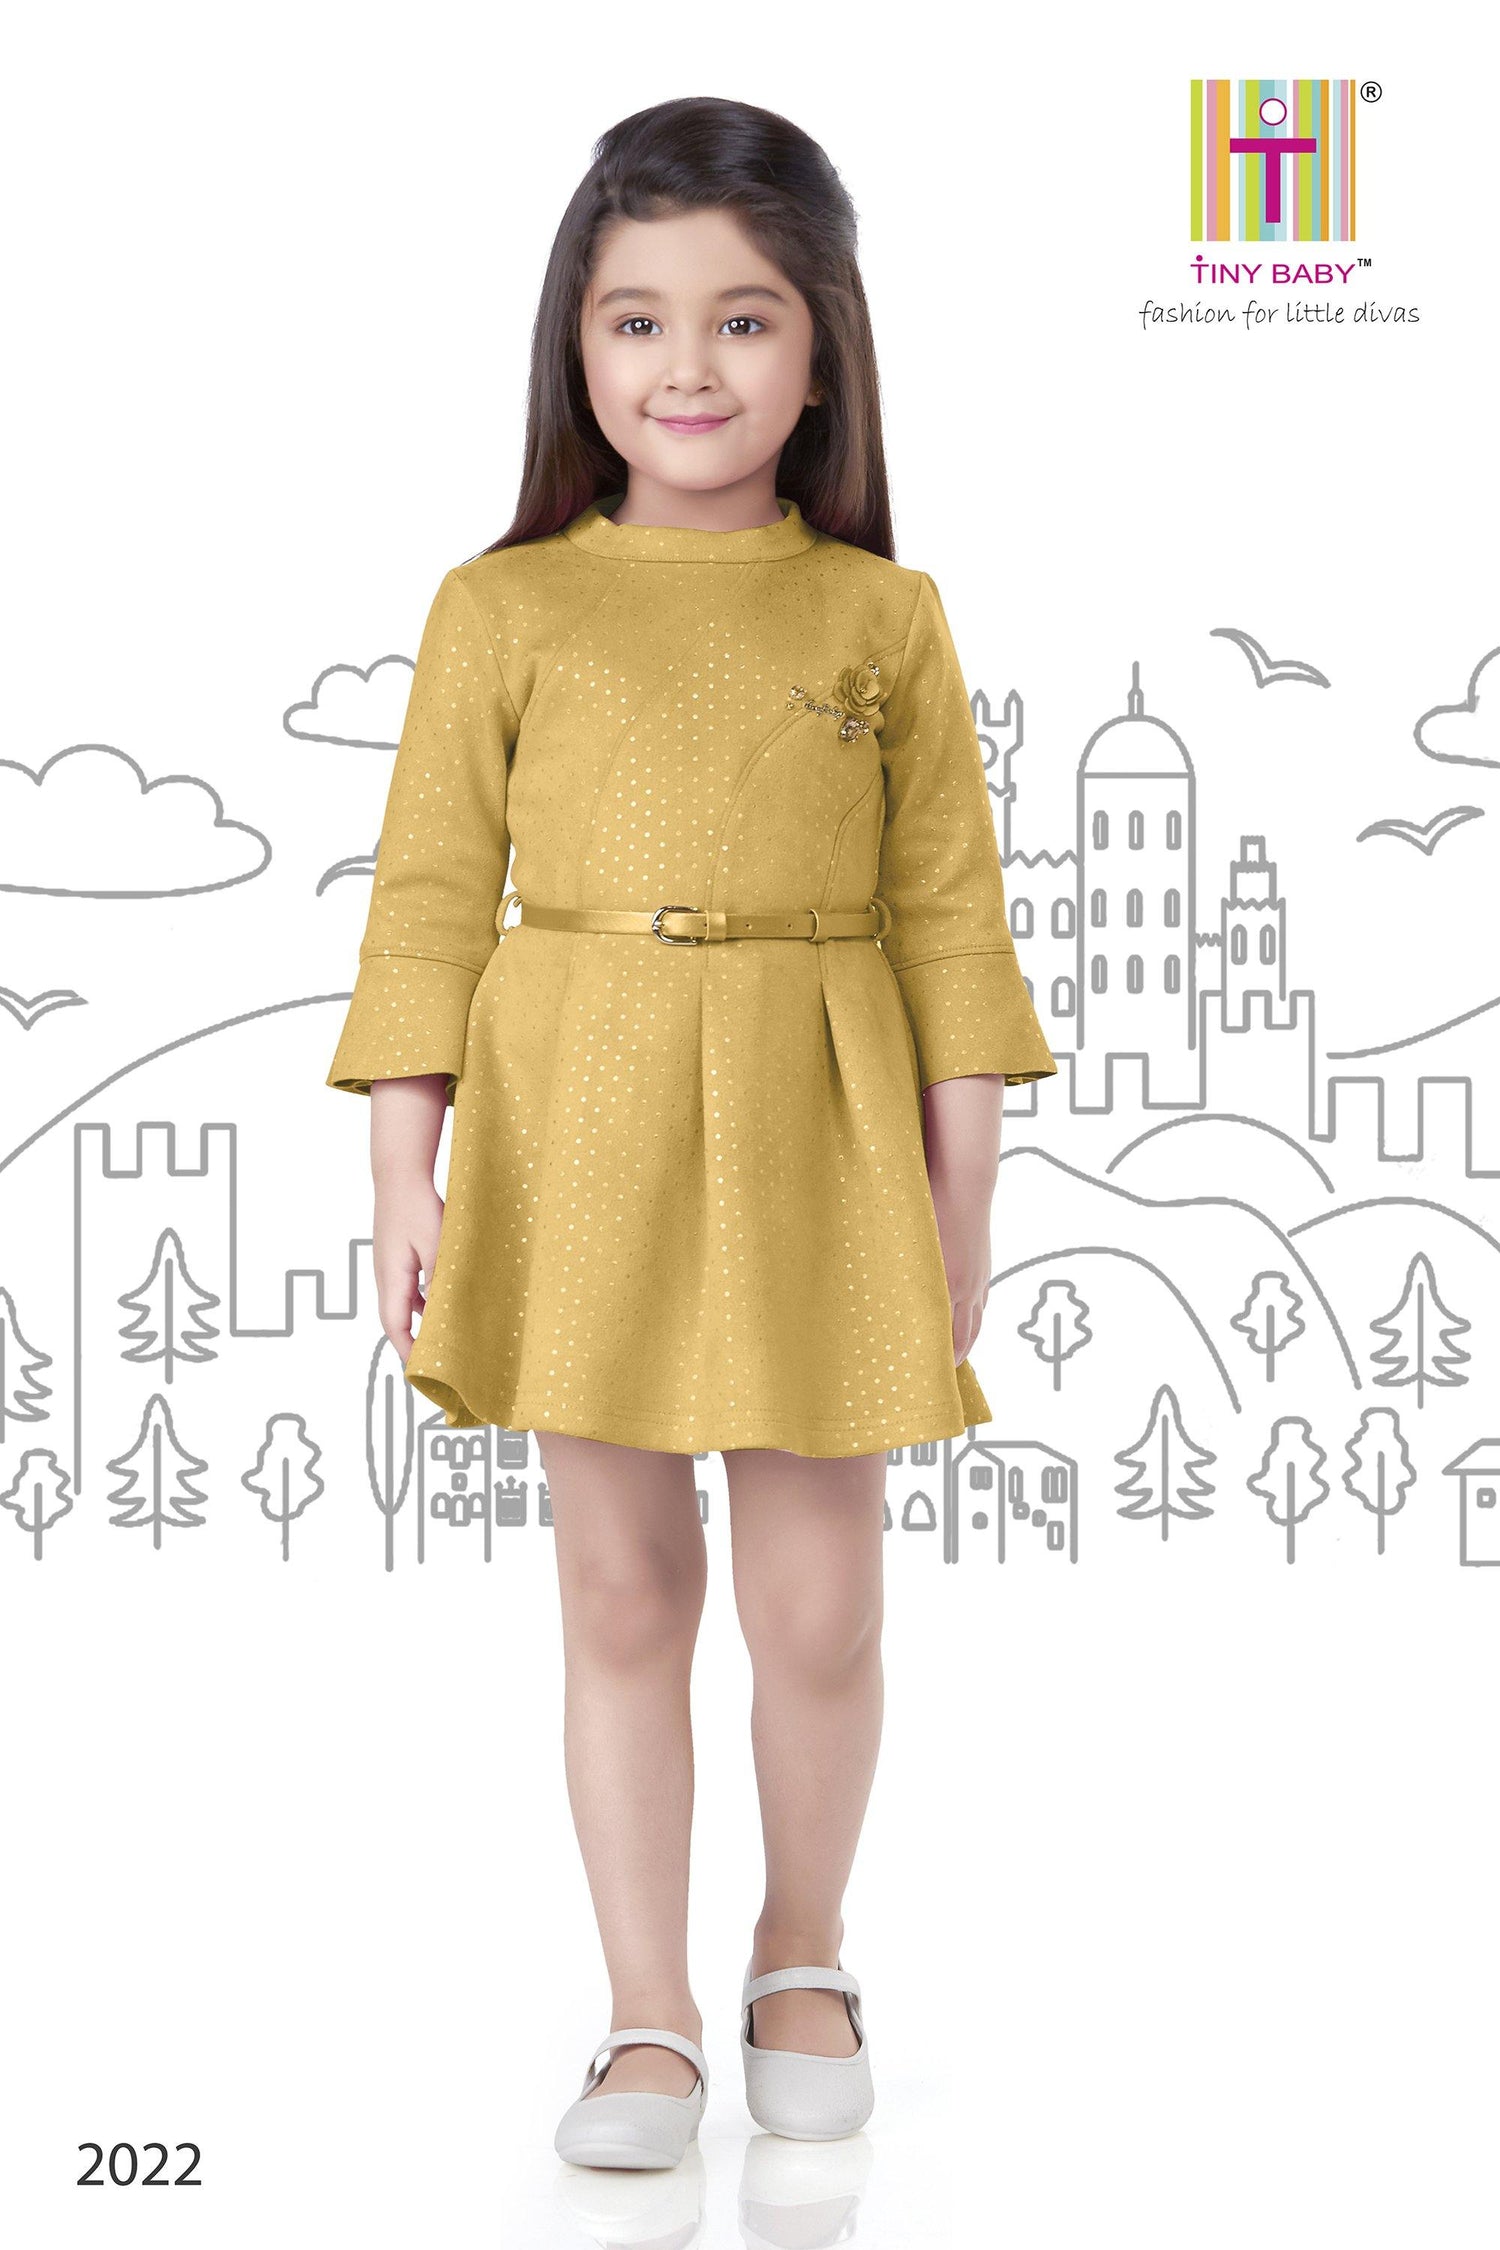 Tiny Baby Mustard Colored Dress - 2022 Mustard - TINY BABY INDIA shop.tinybaby.in